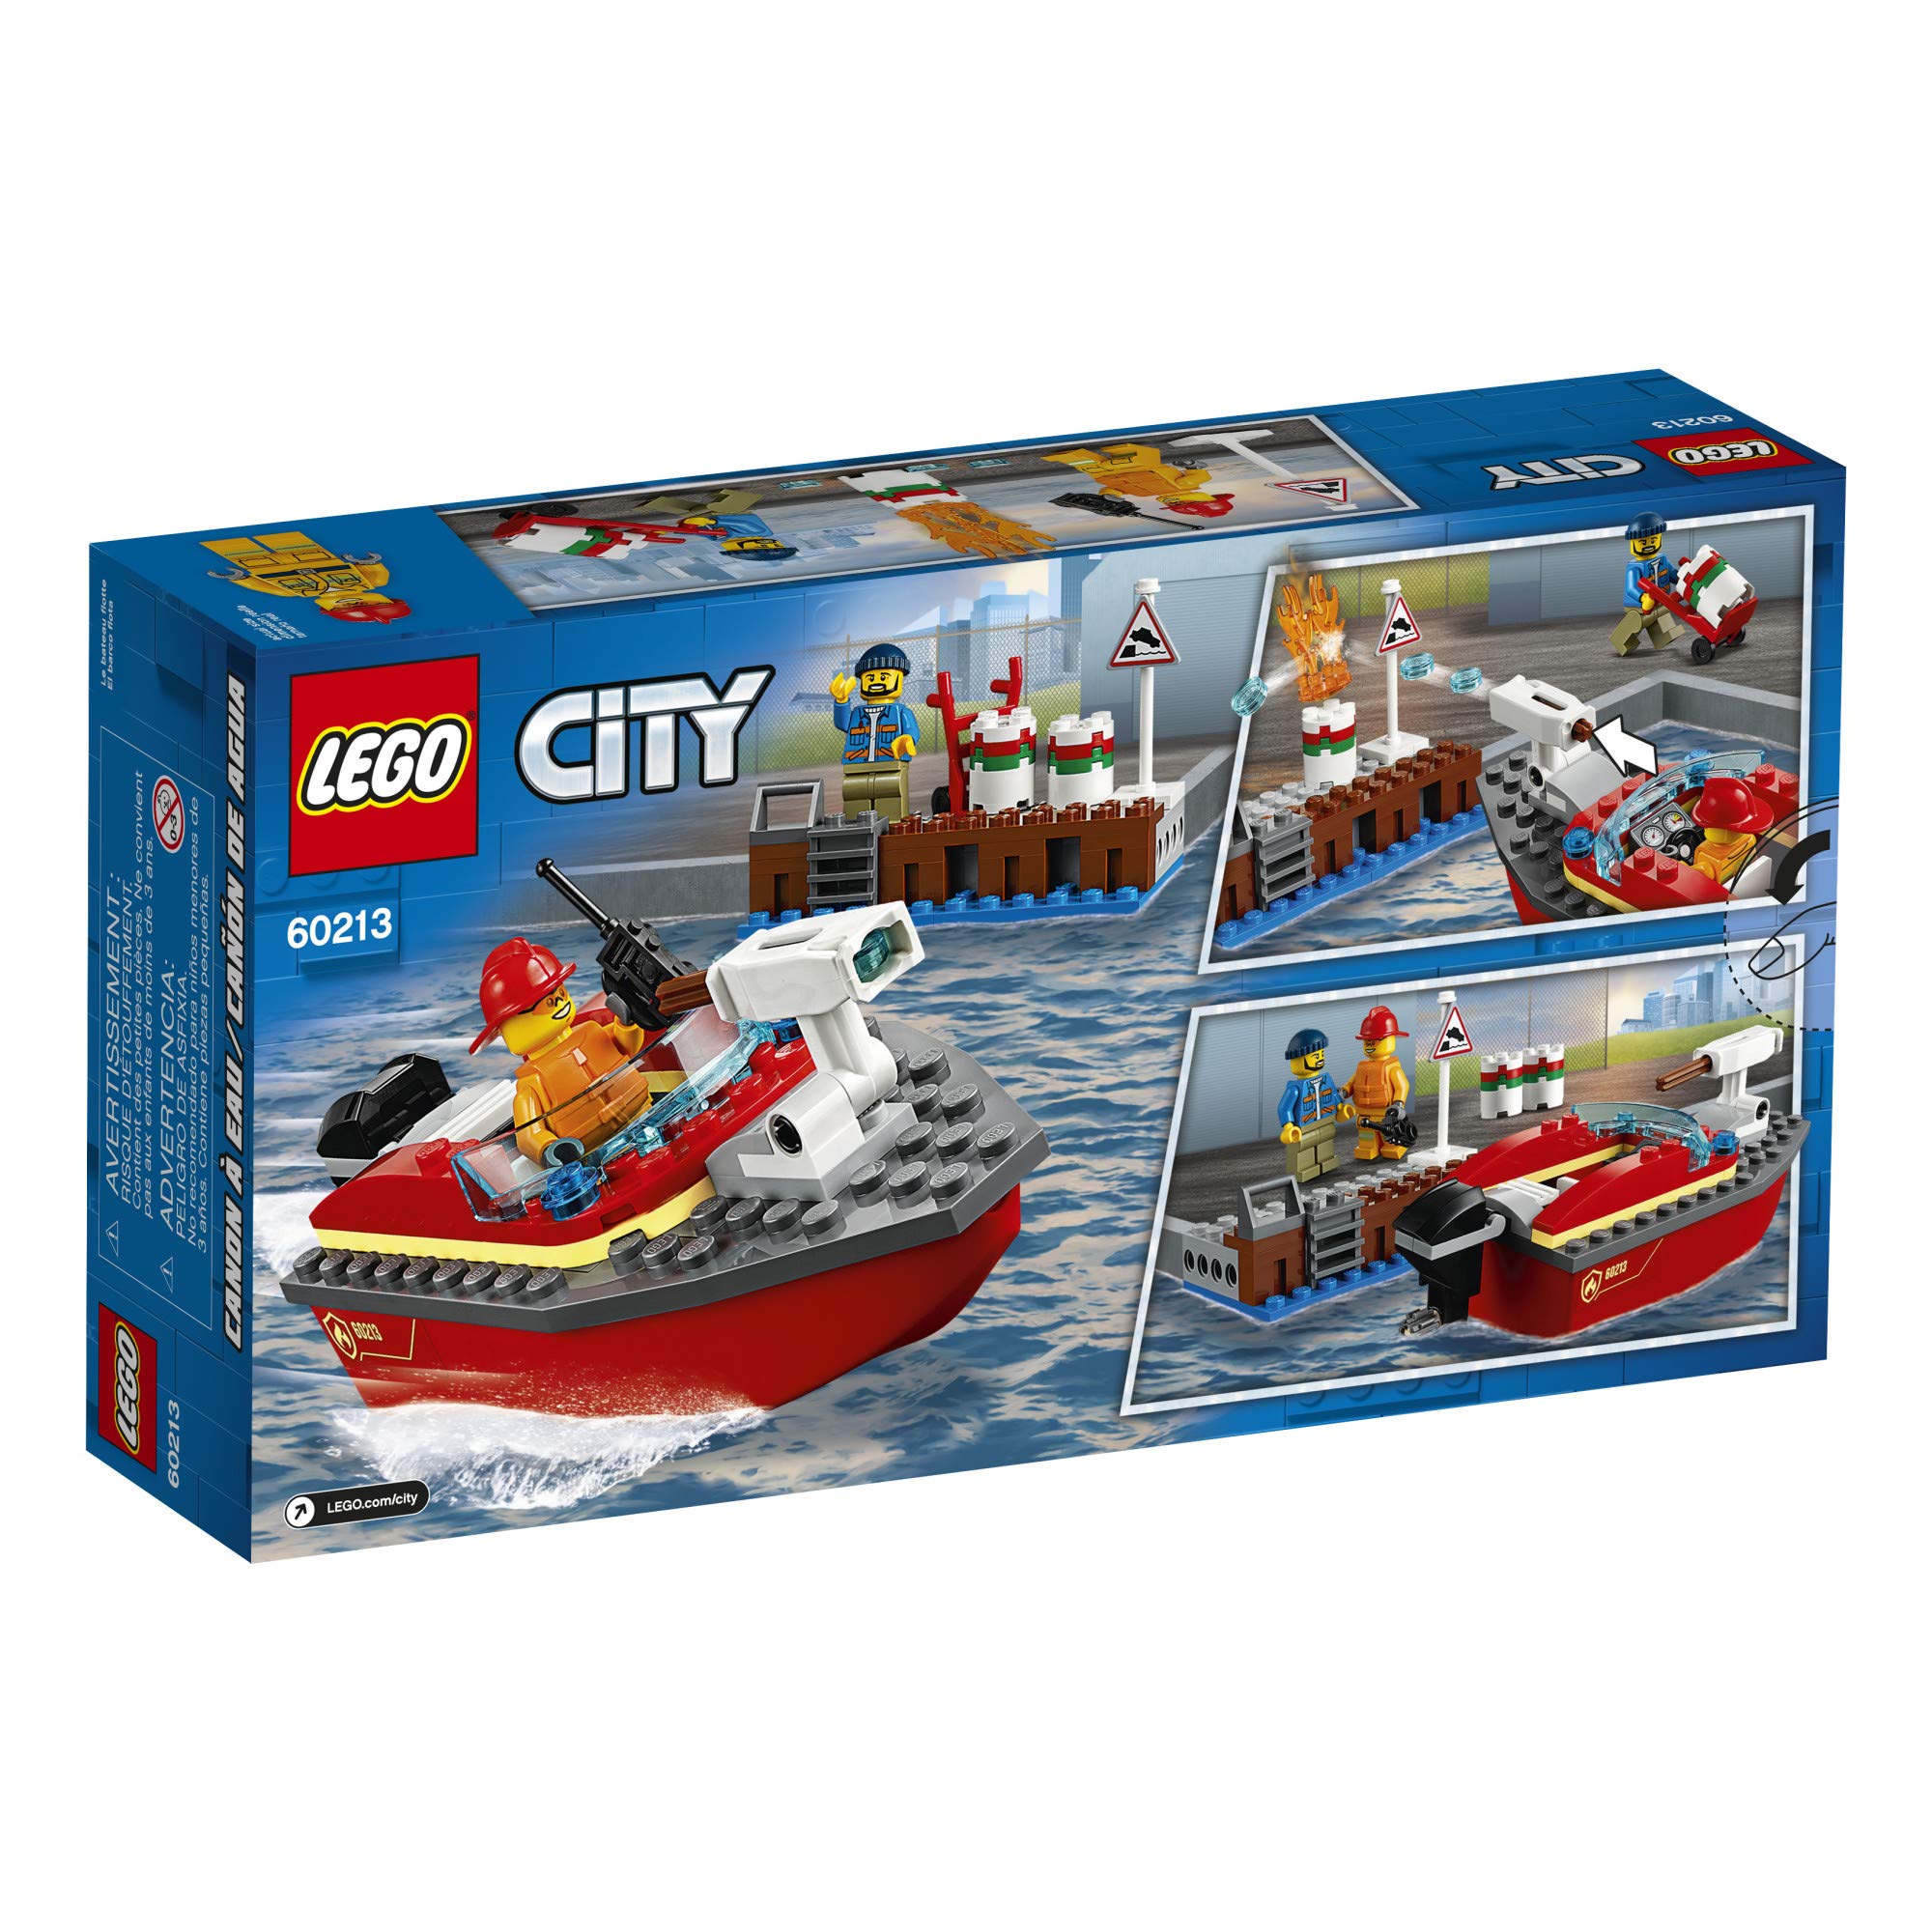 LEGO City Dock Side Fire 60213 Building Kit (97 Pieces)